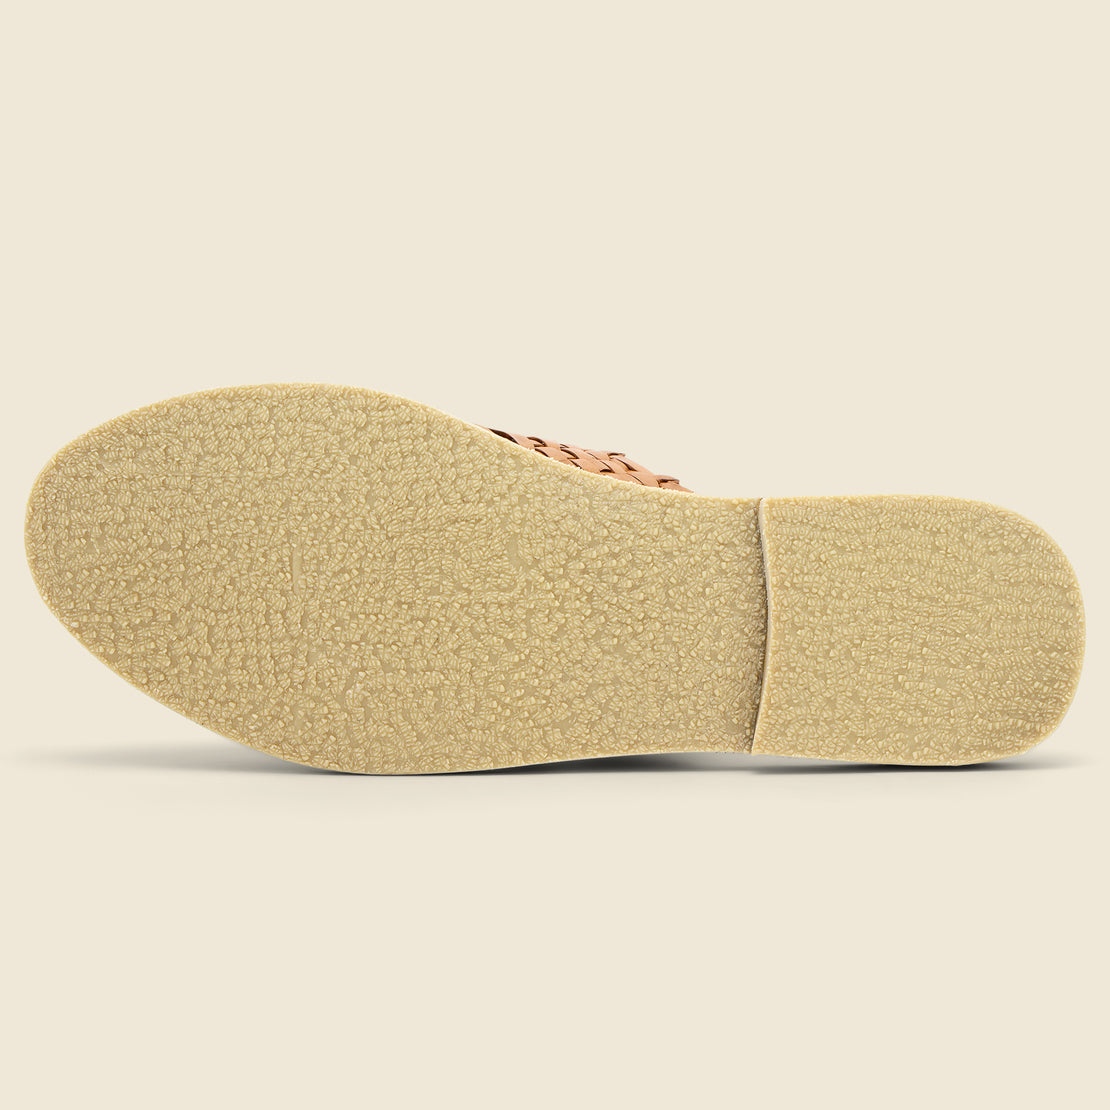 Polanco Huarache - Tan - Chamula - STAG Provisions - Shoes - Sandals / Flops